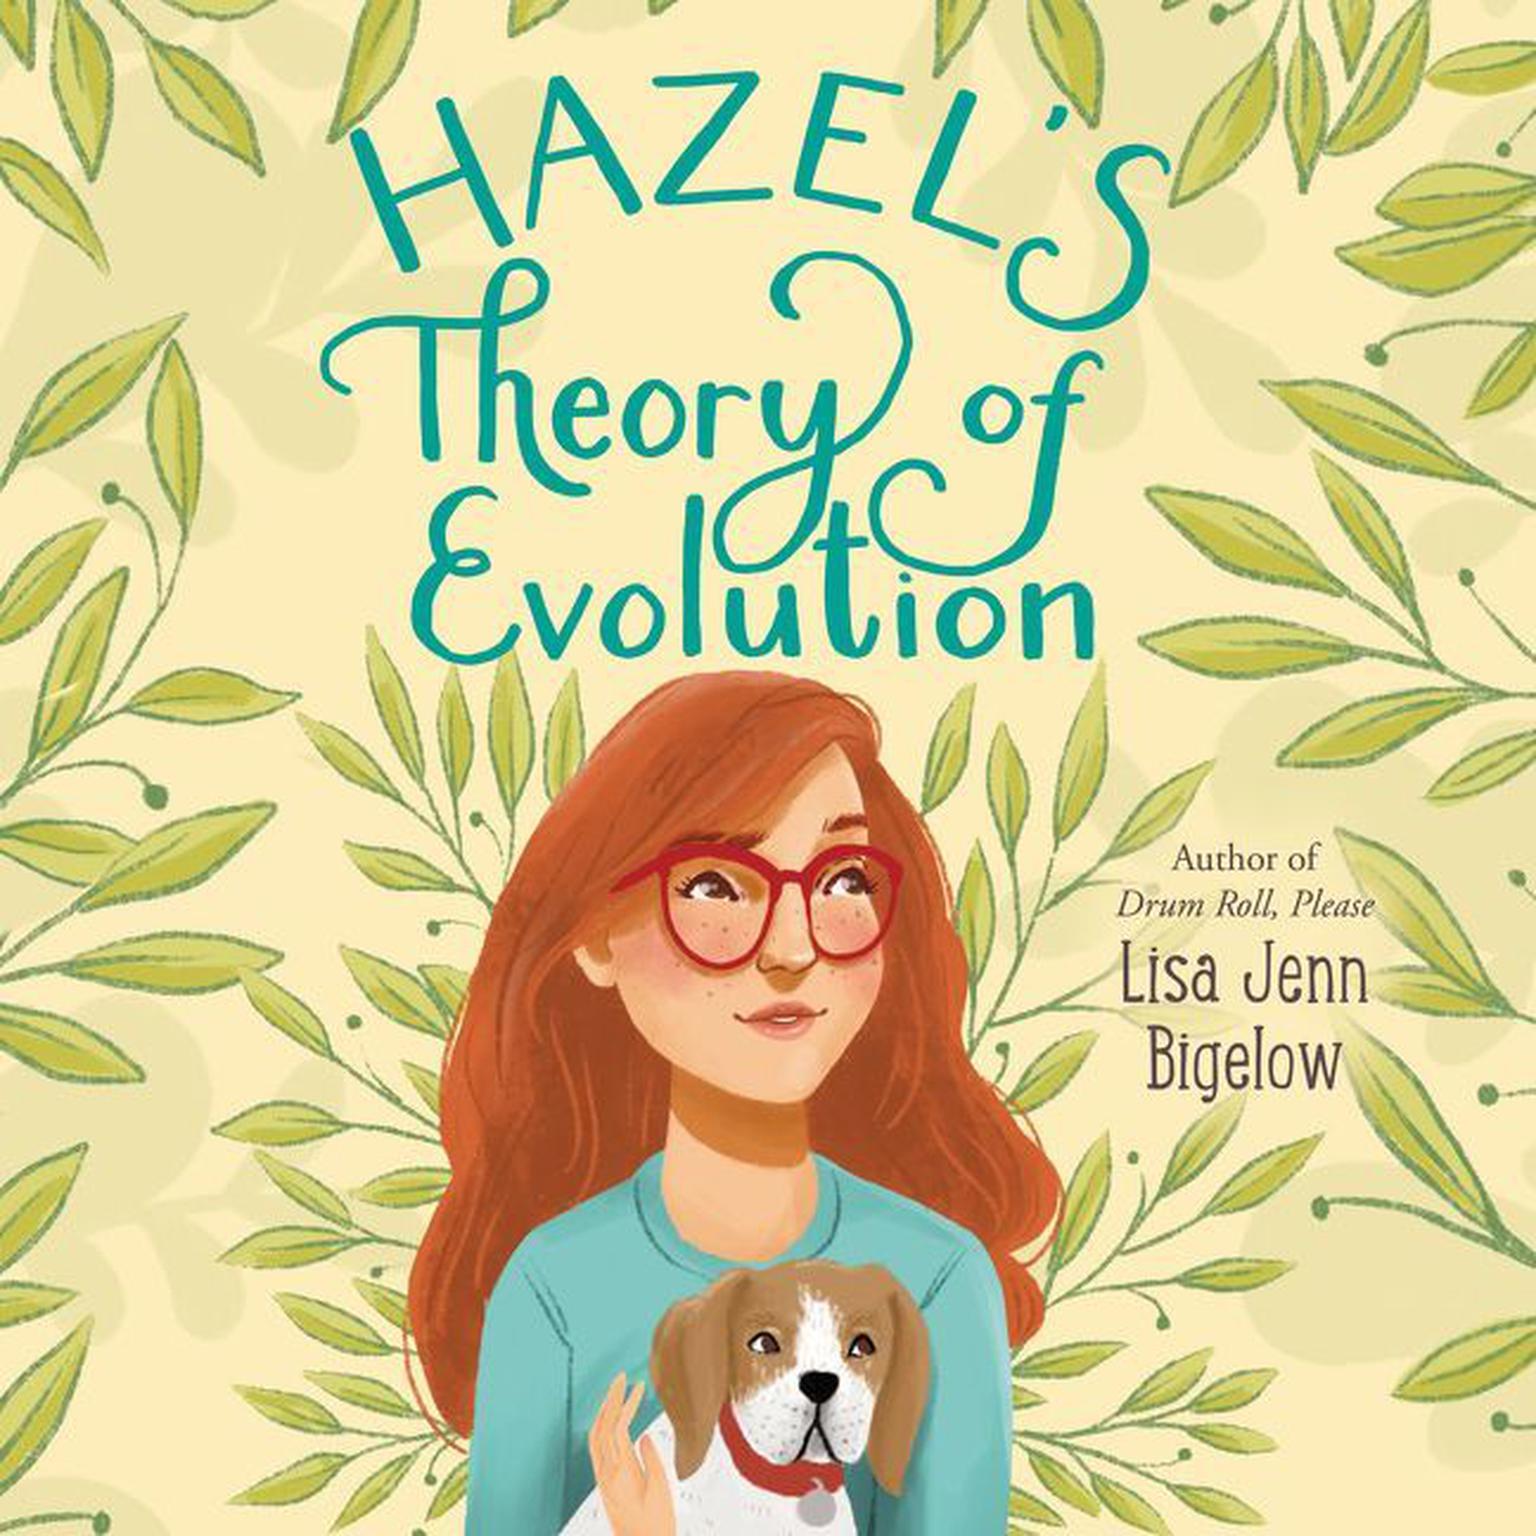 Hazels Theory of Evolution Audiobook, by Lisa Jenn Bigelow